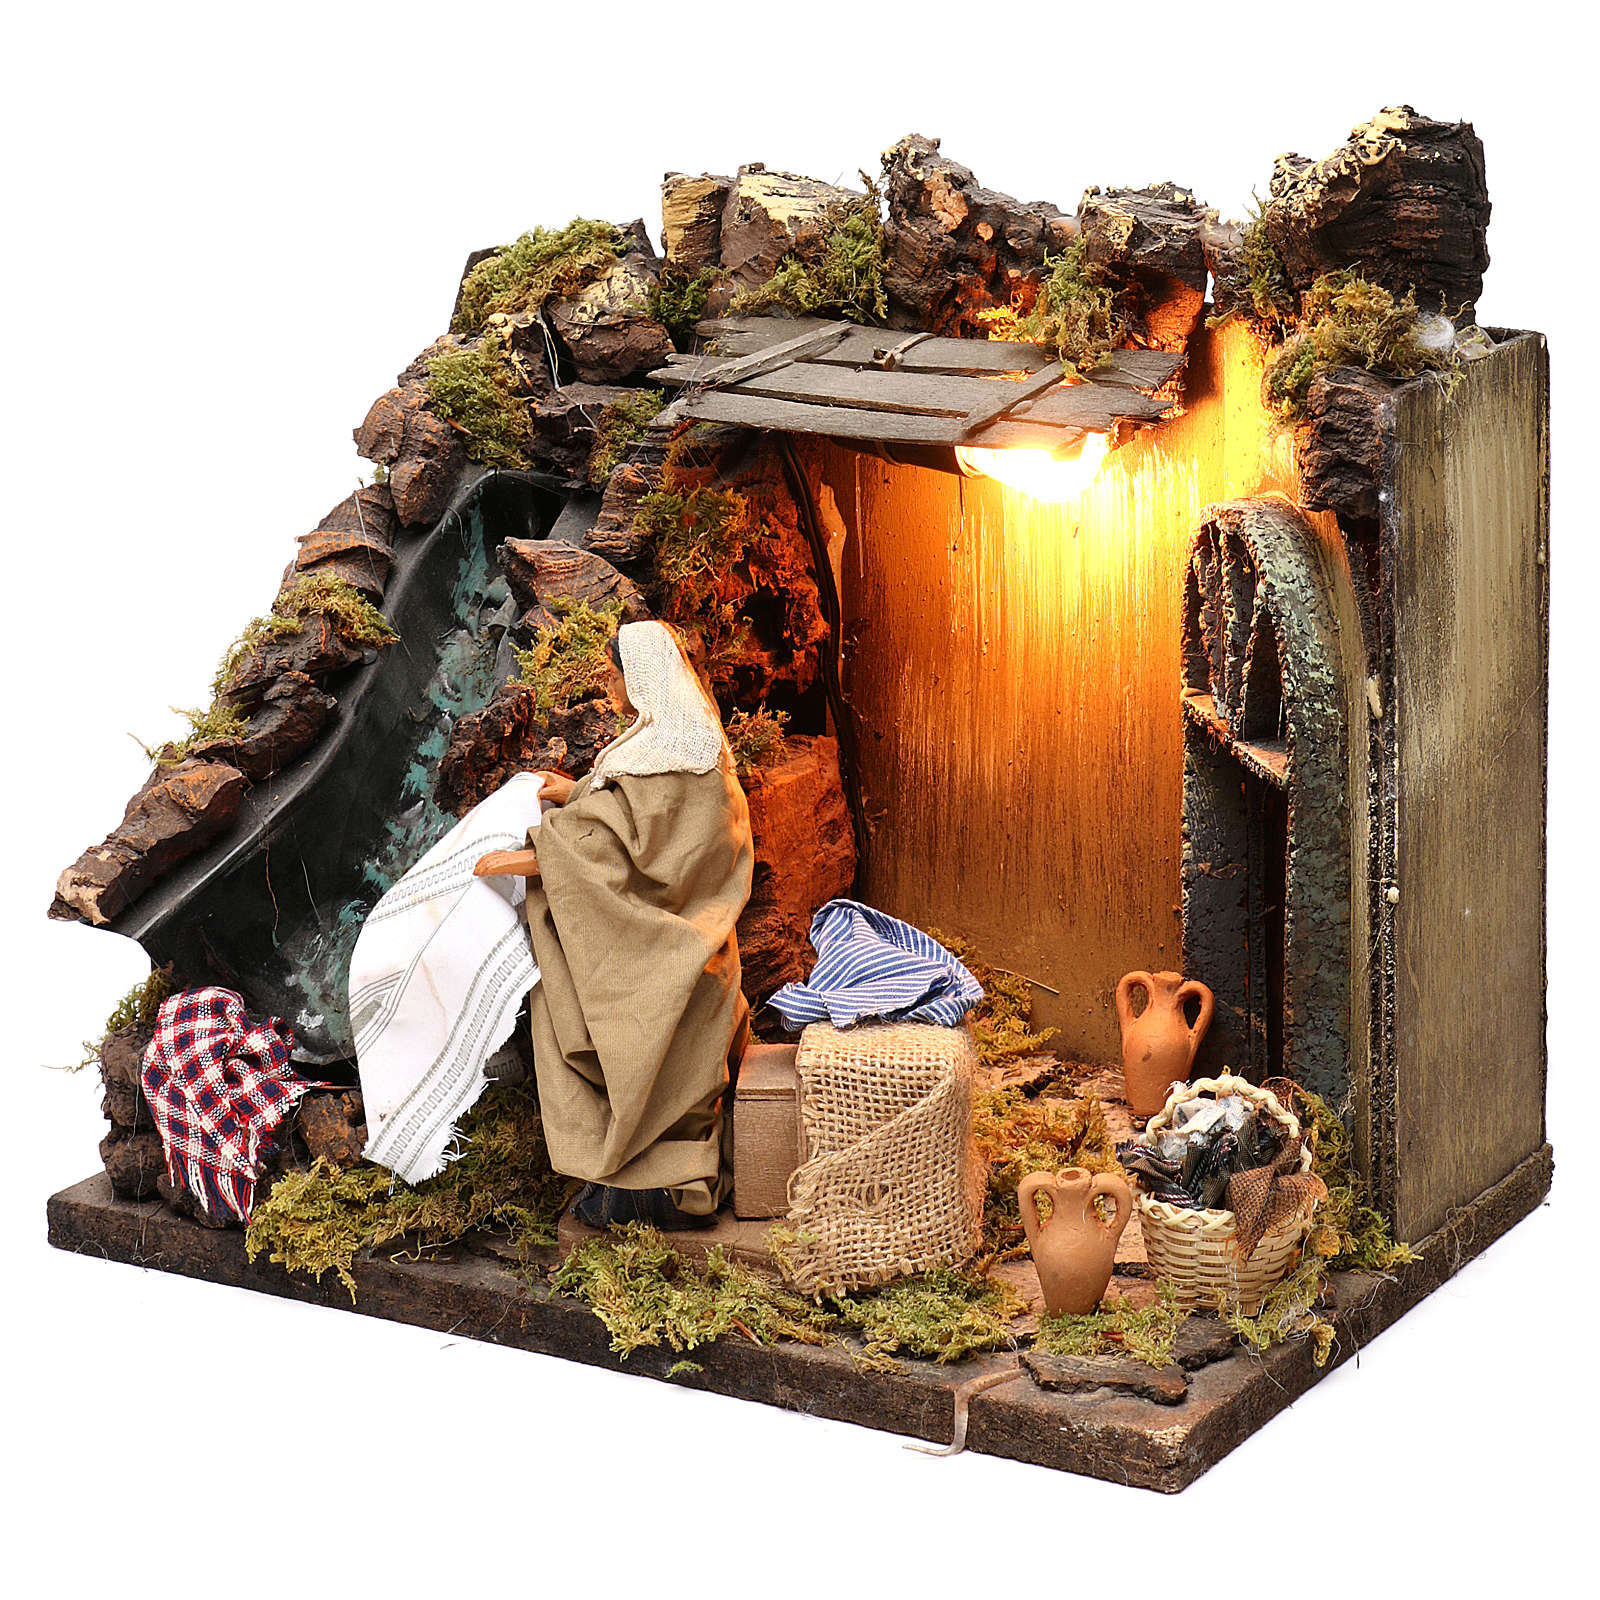 Animated Nativity scene figurine, laundress, 12 cm | online sales on ...